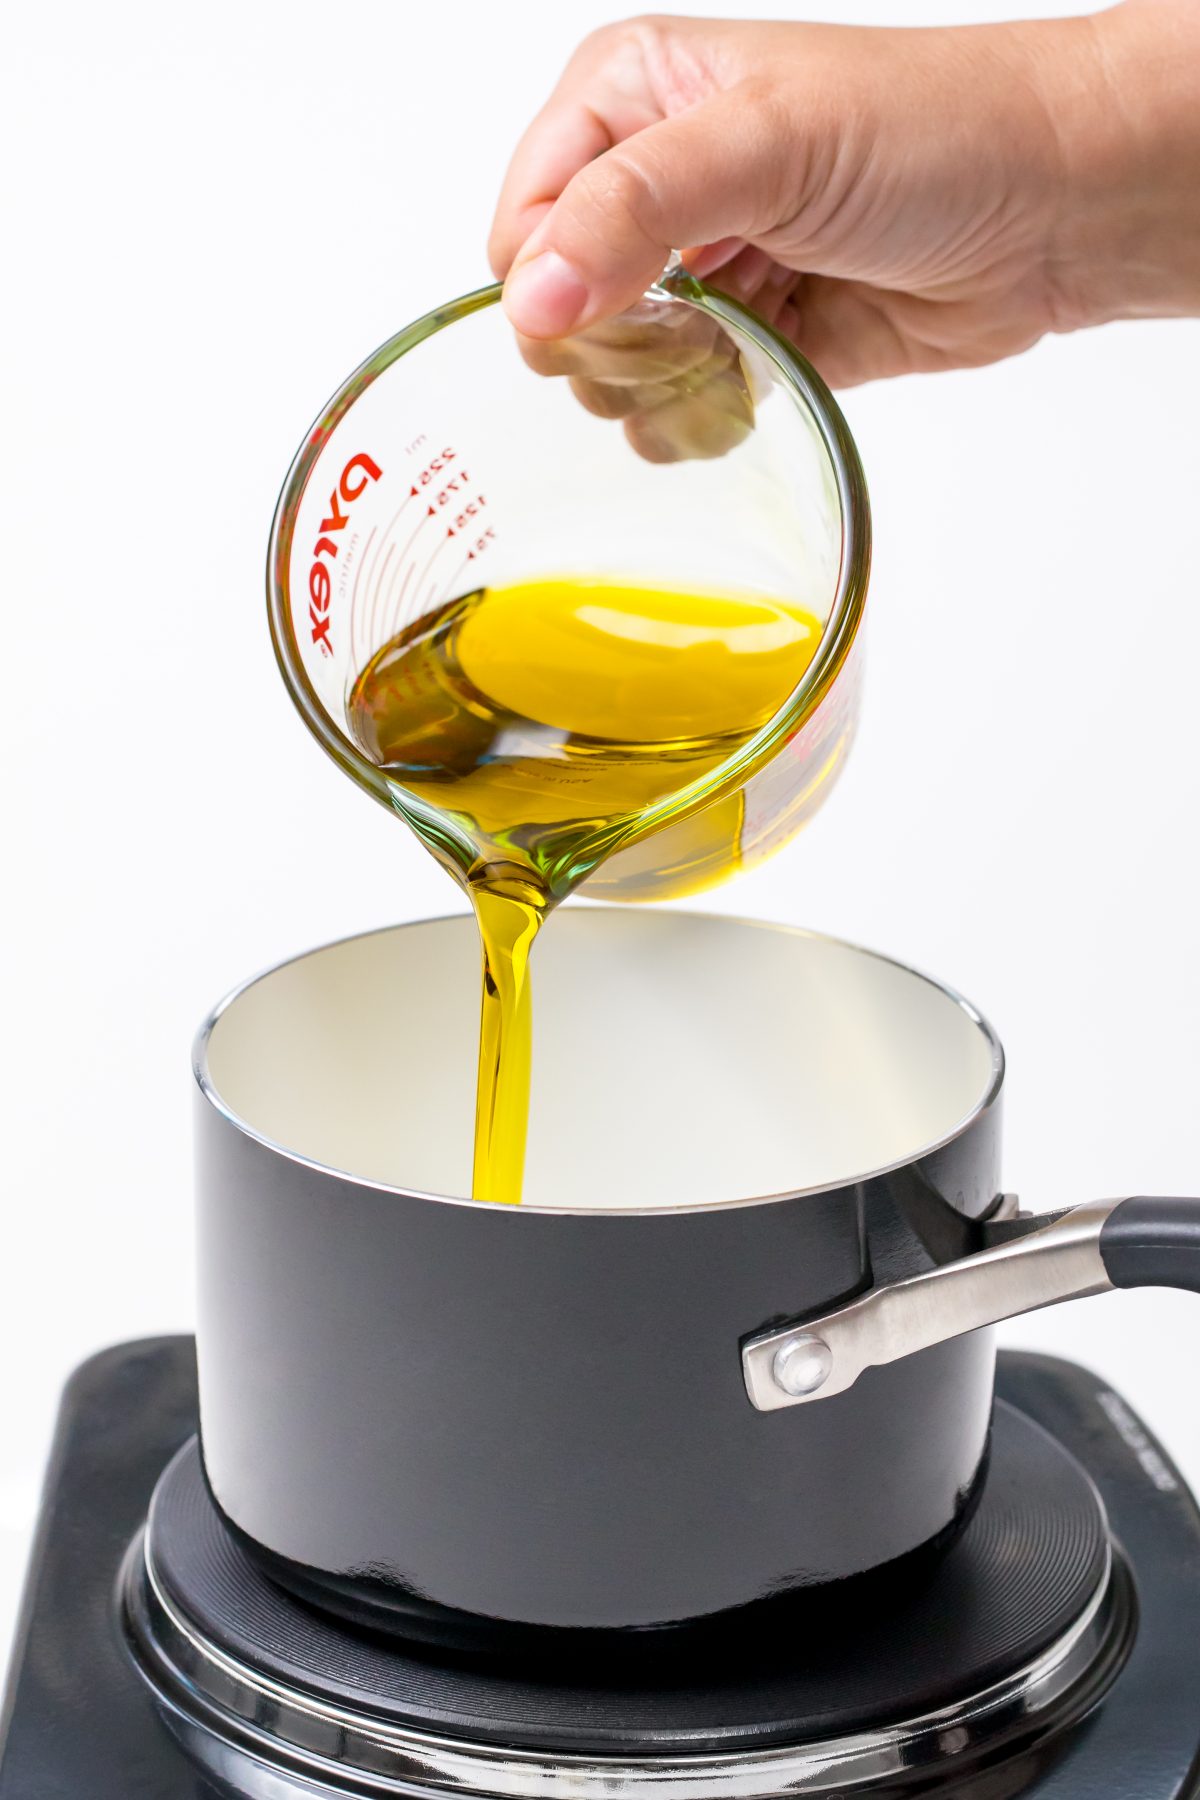 5D4B7855 - Rosemary lemon roasted turkey - make flavored olive oil